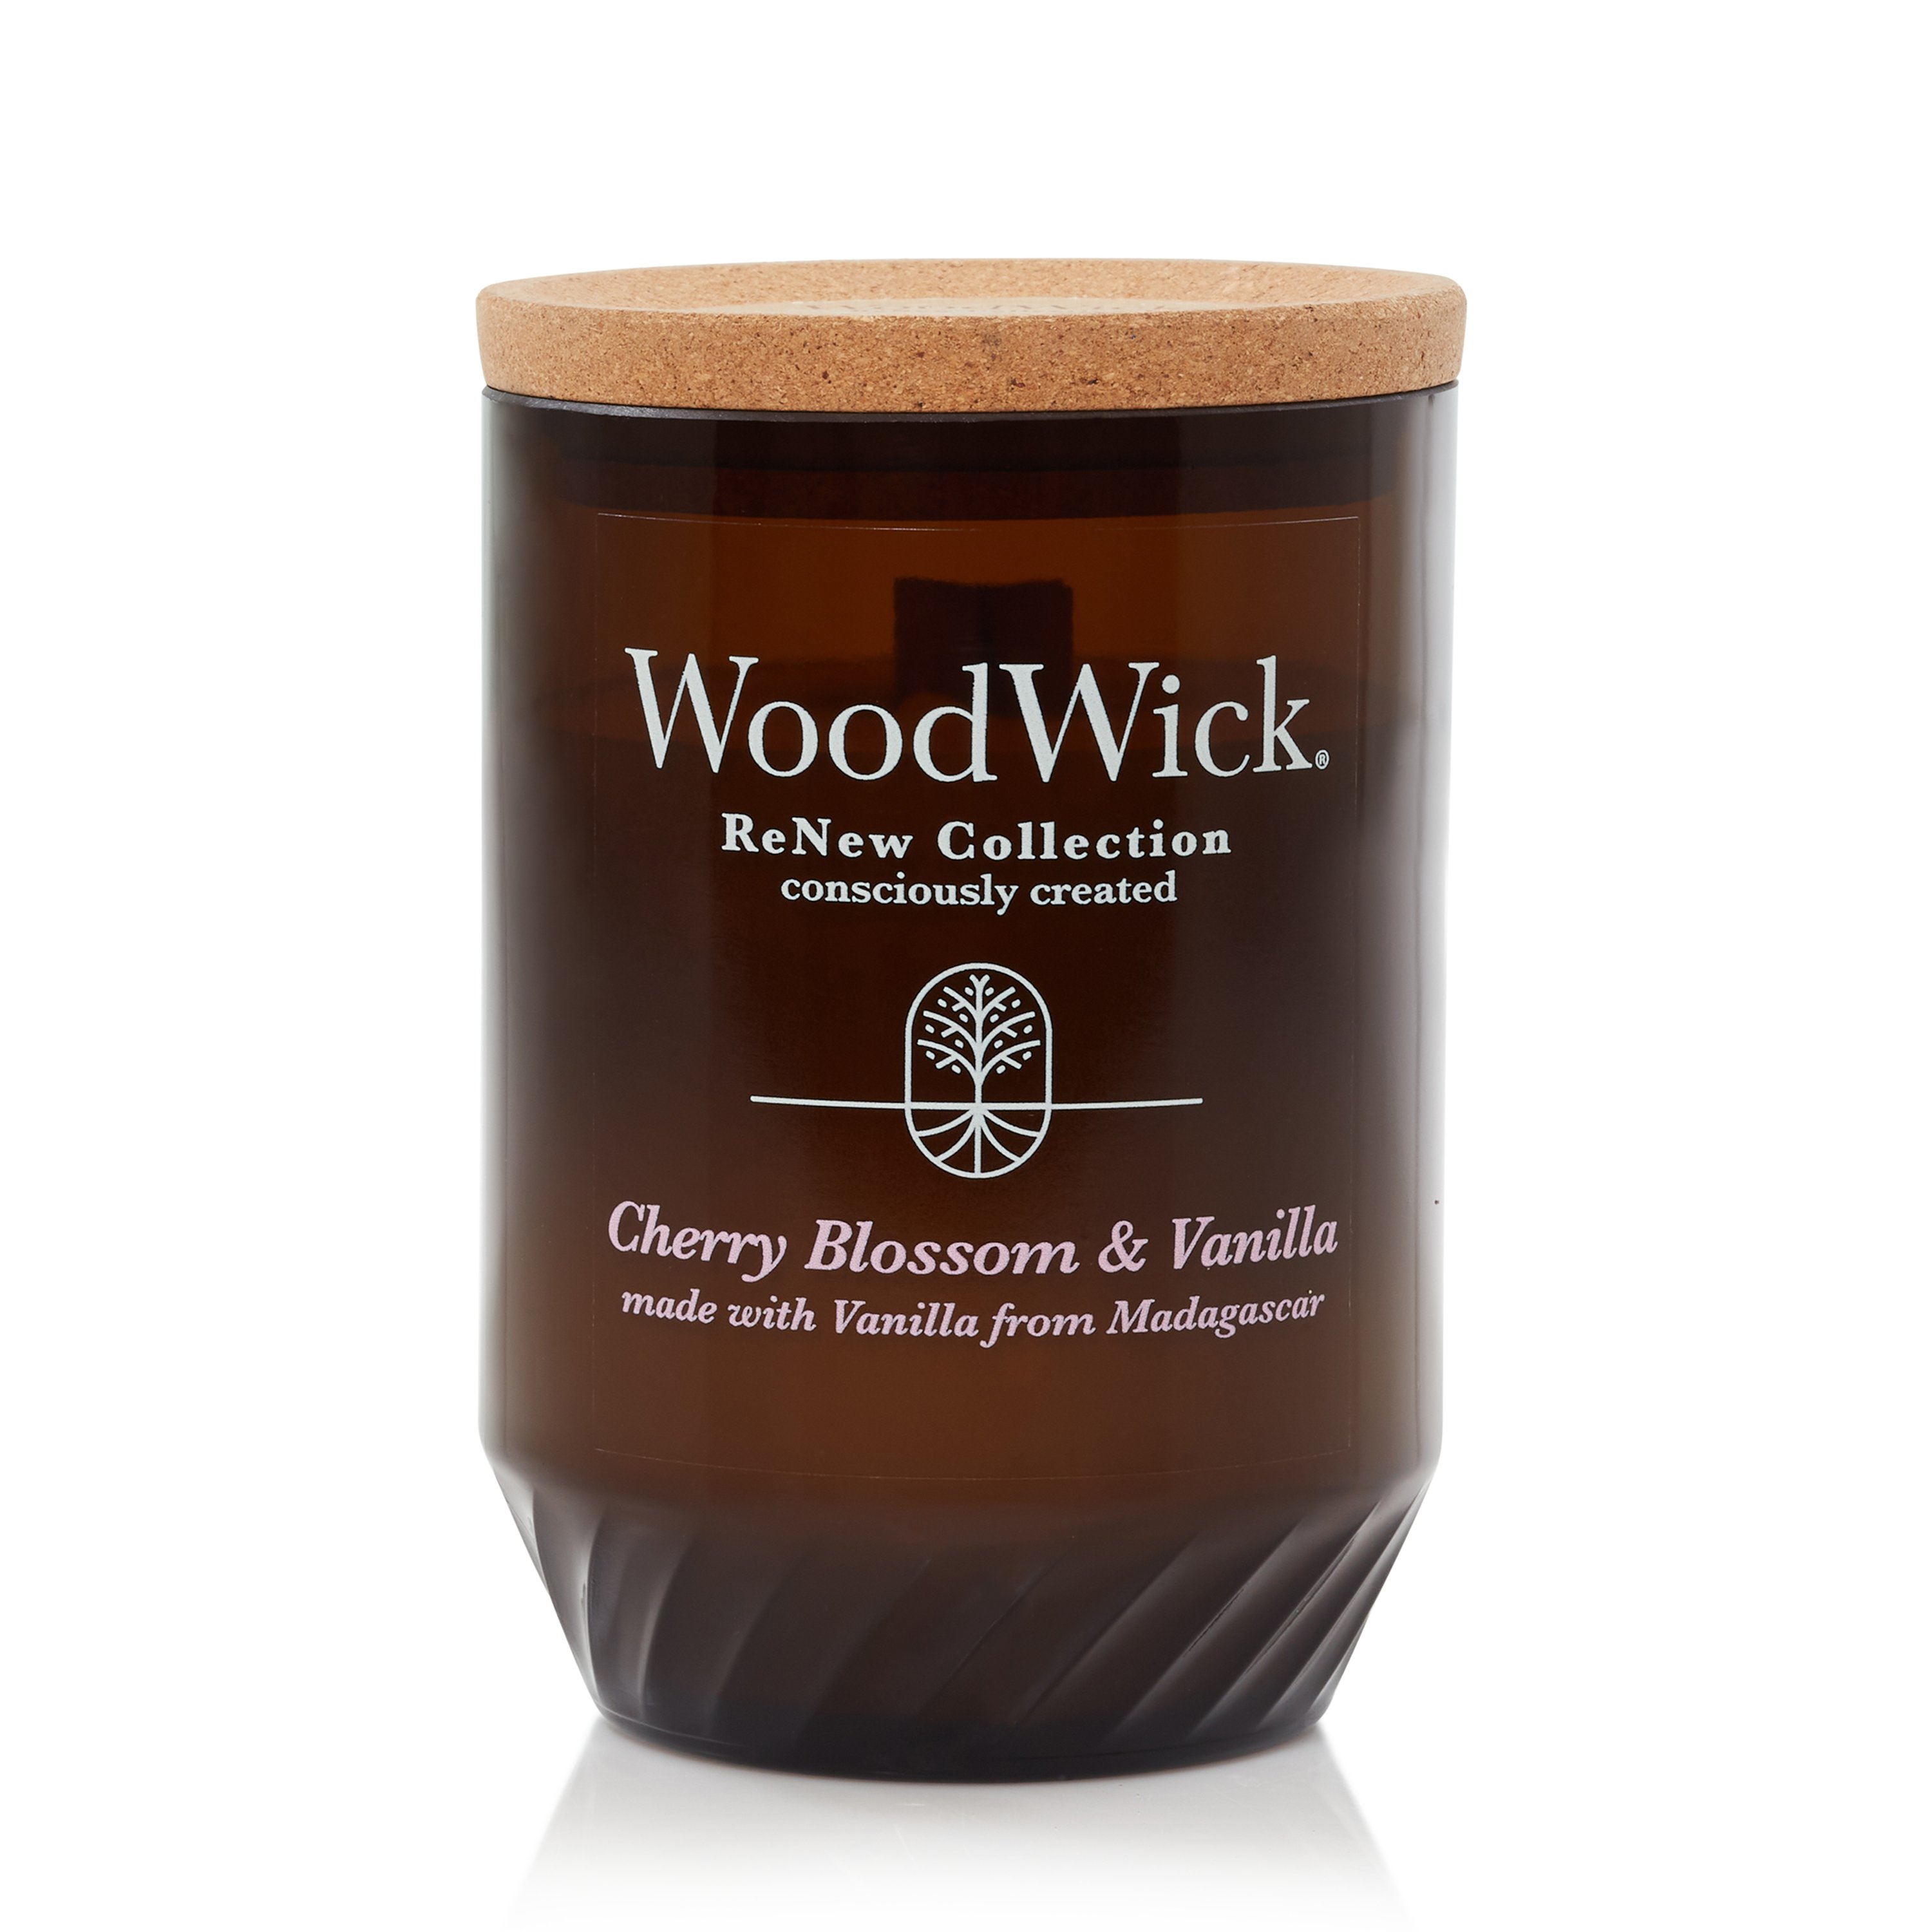 Woodwick candela vanilla bean – Iperverde